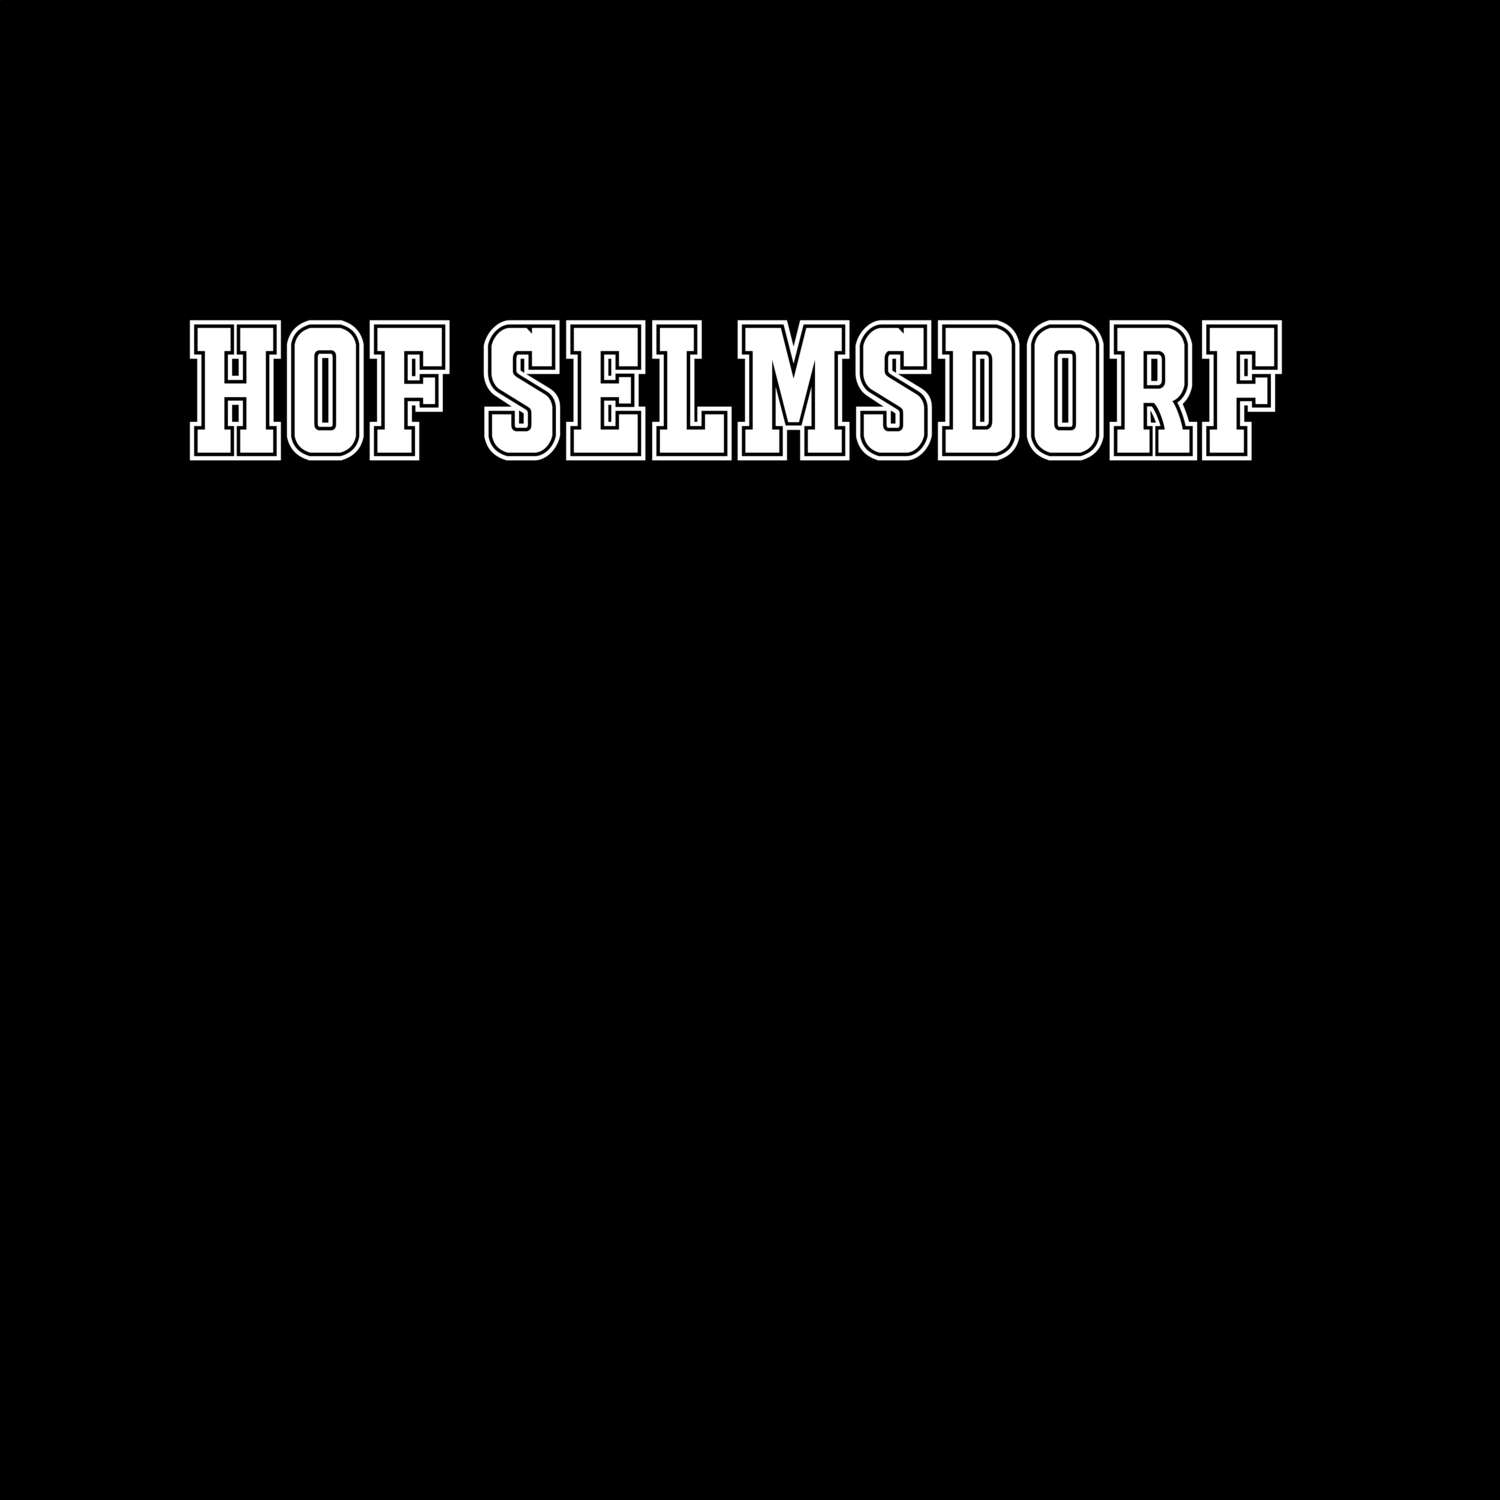 Hof Selmsdorf T-Shirt »Classic«